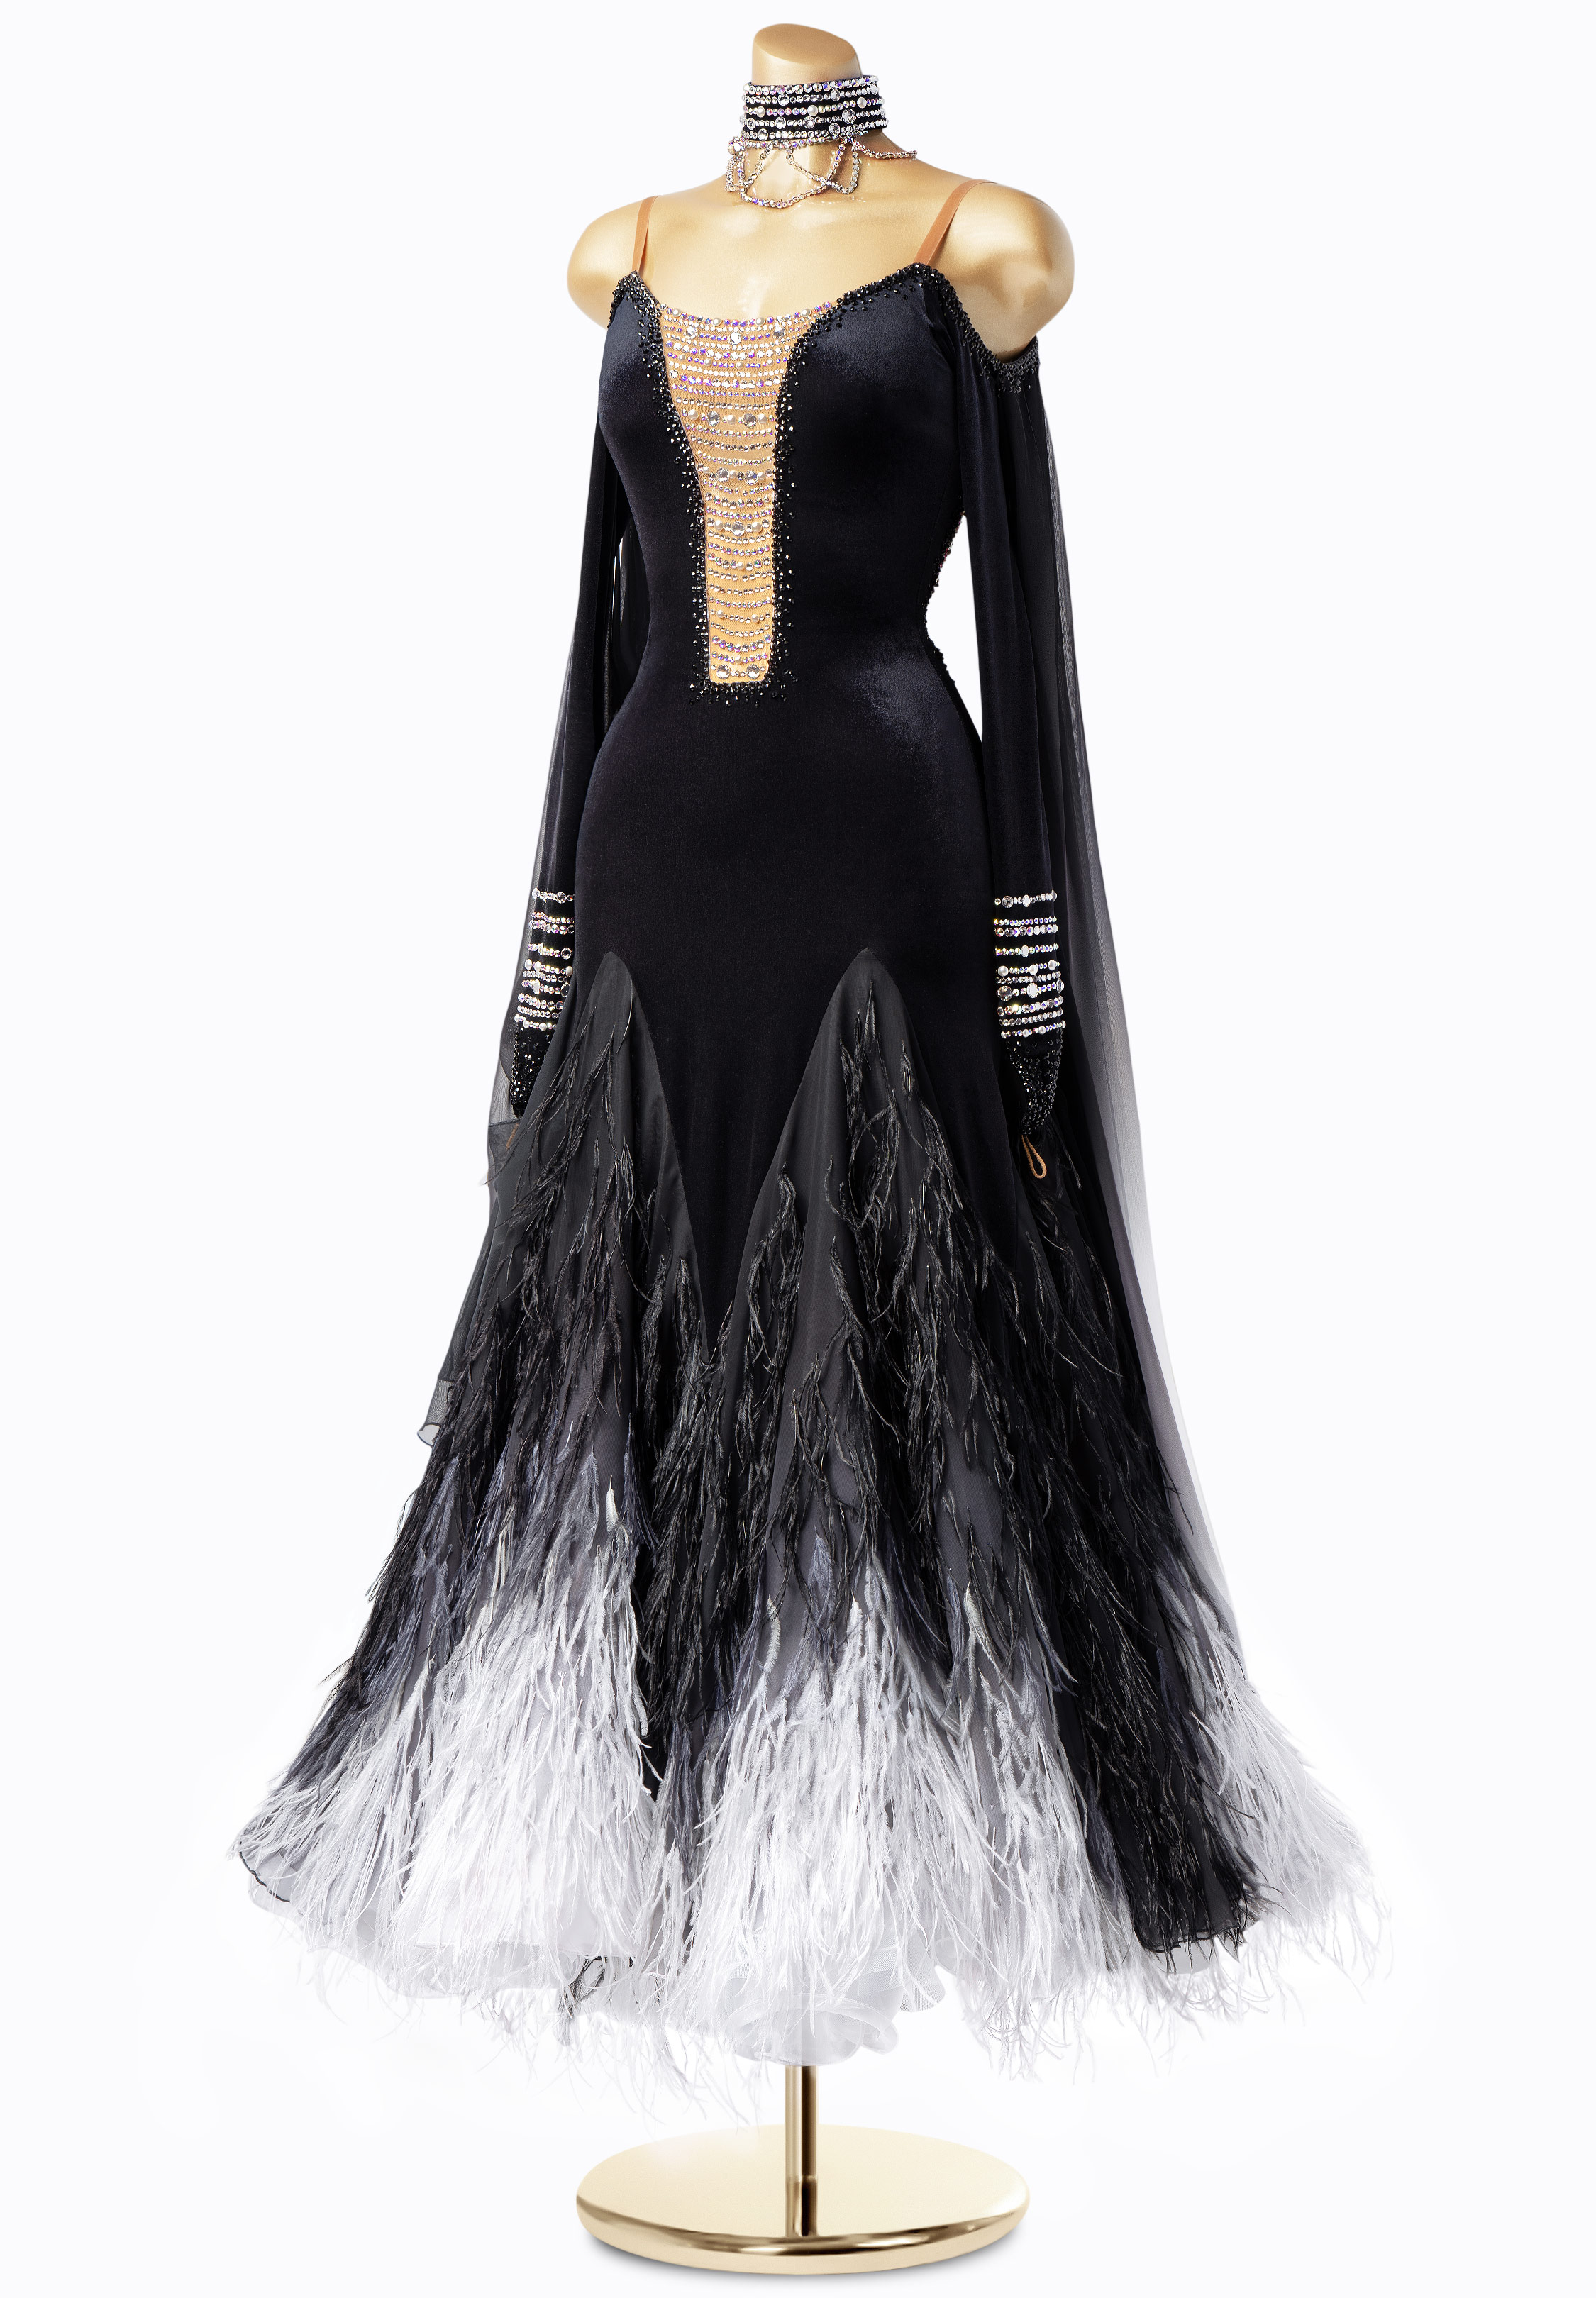 Gorgeous lavender gown | Ballroom dress inspiration, Dance dresses, Ballroom  dance dresses